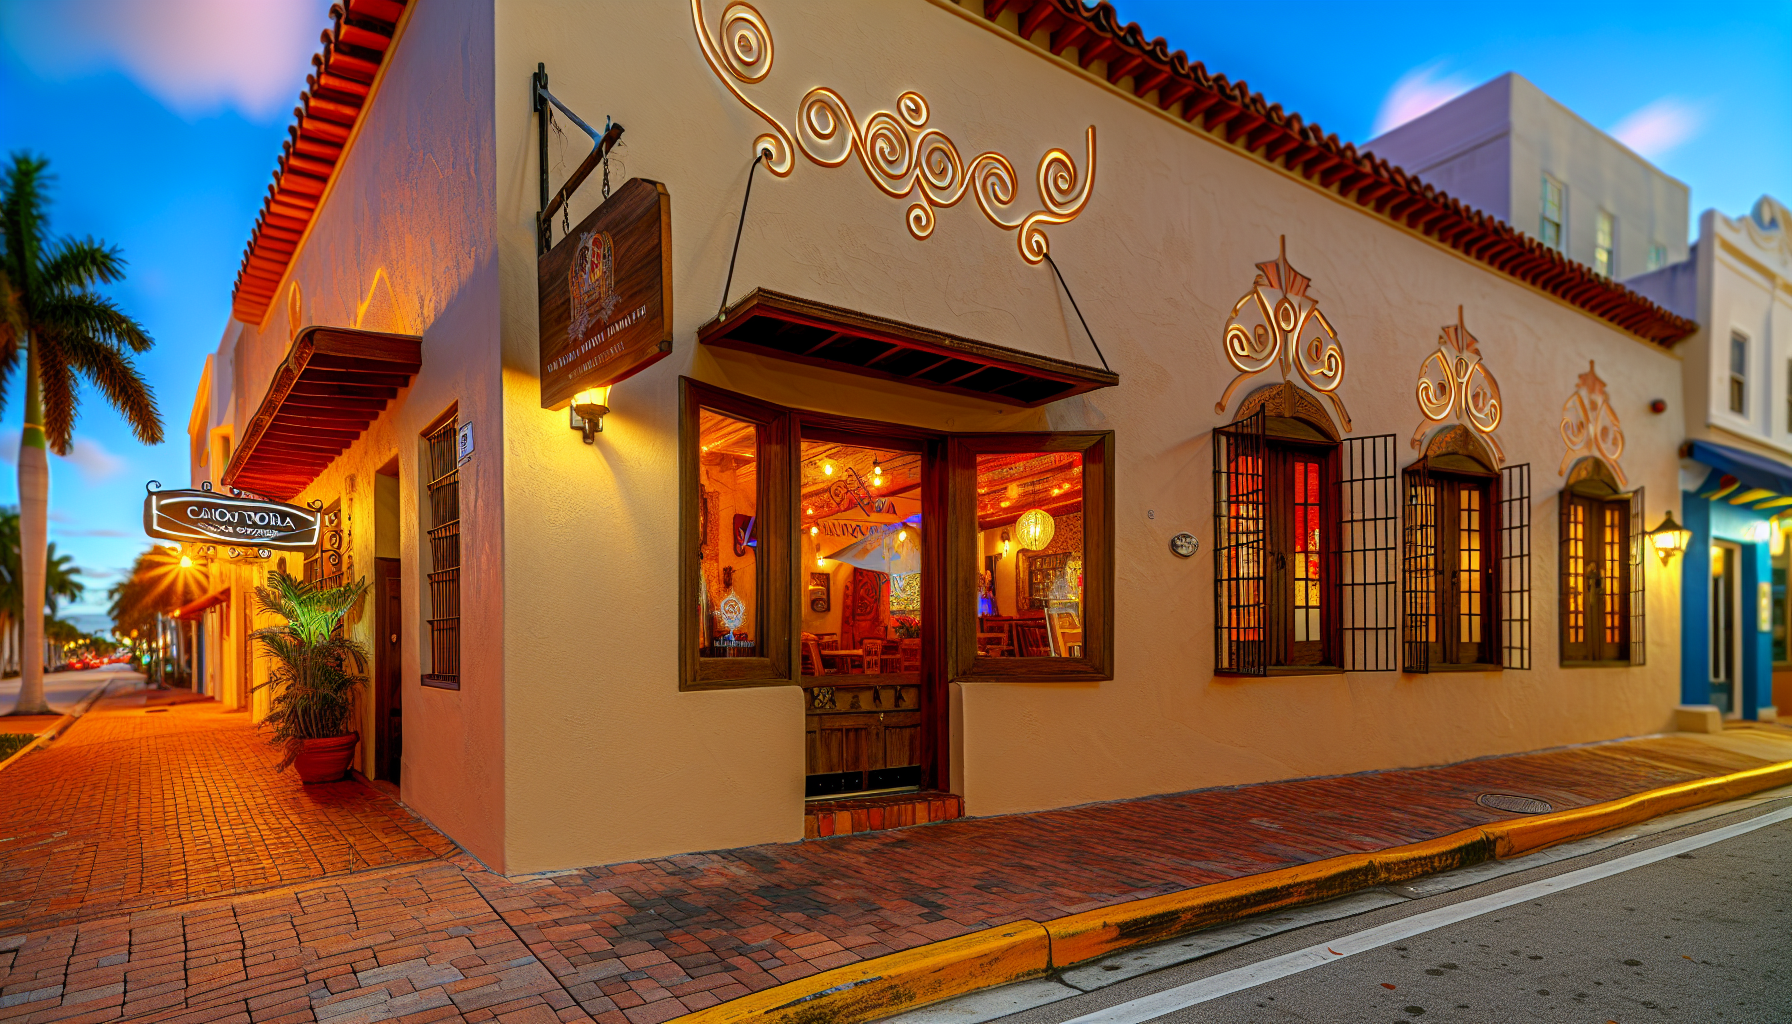 Exterior of a Peruvian restaurant in Fort Lauderdale